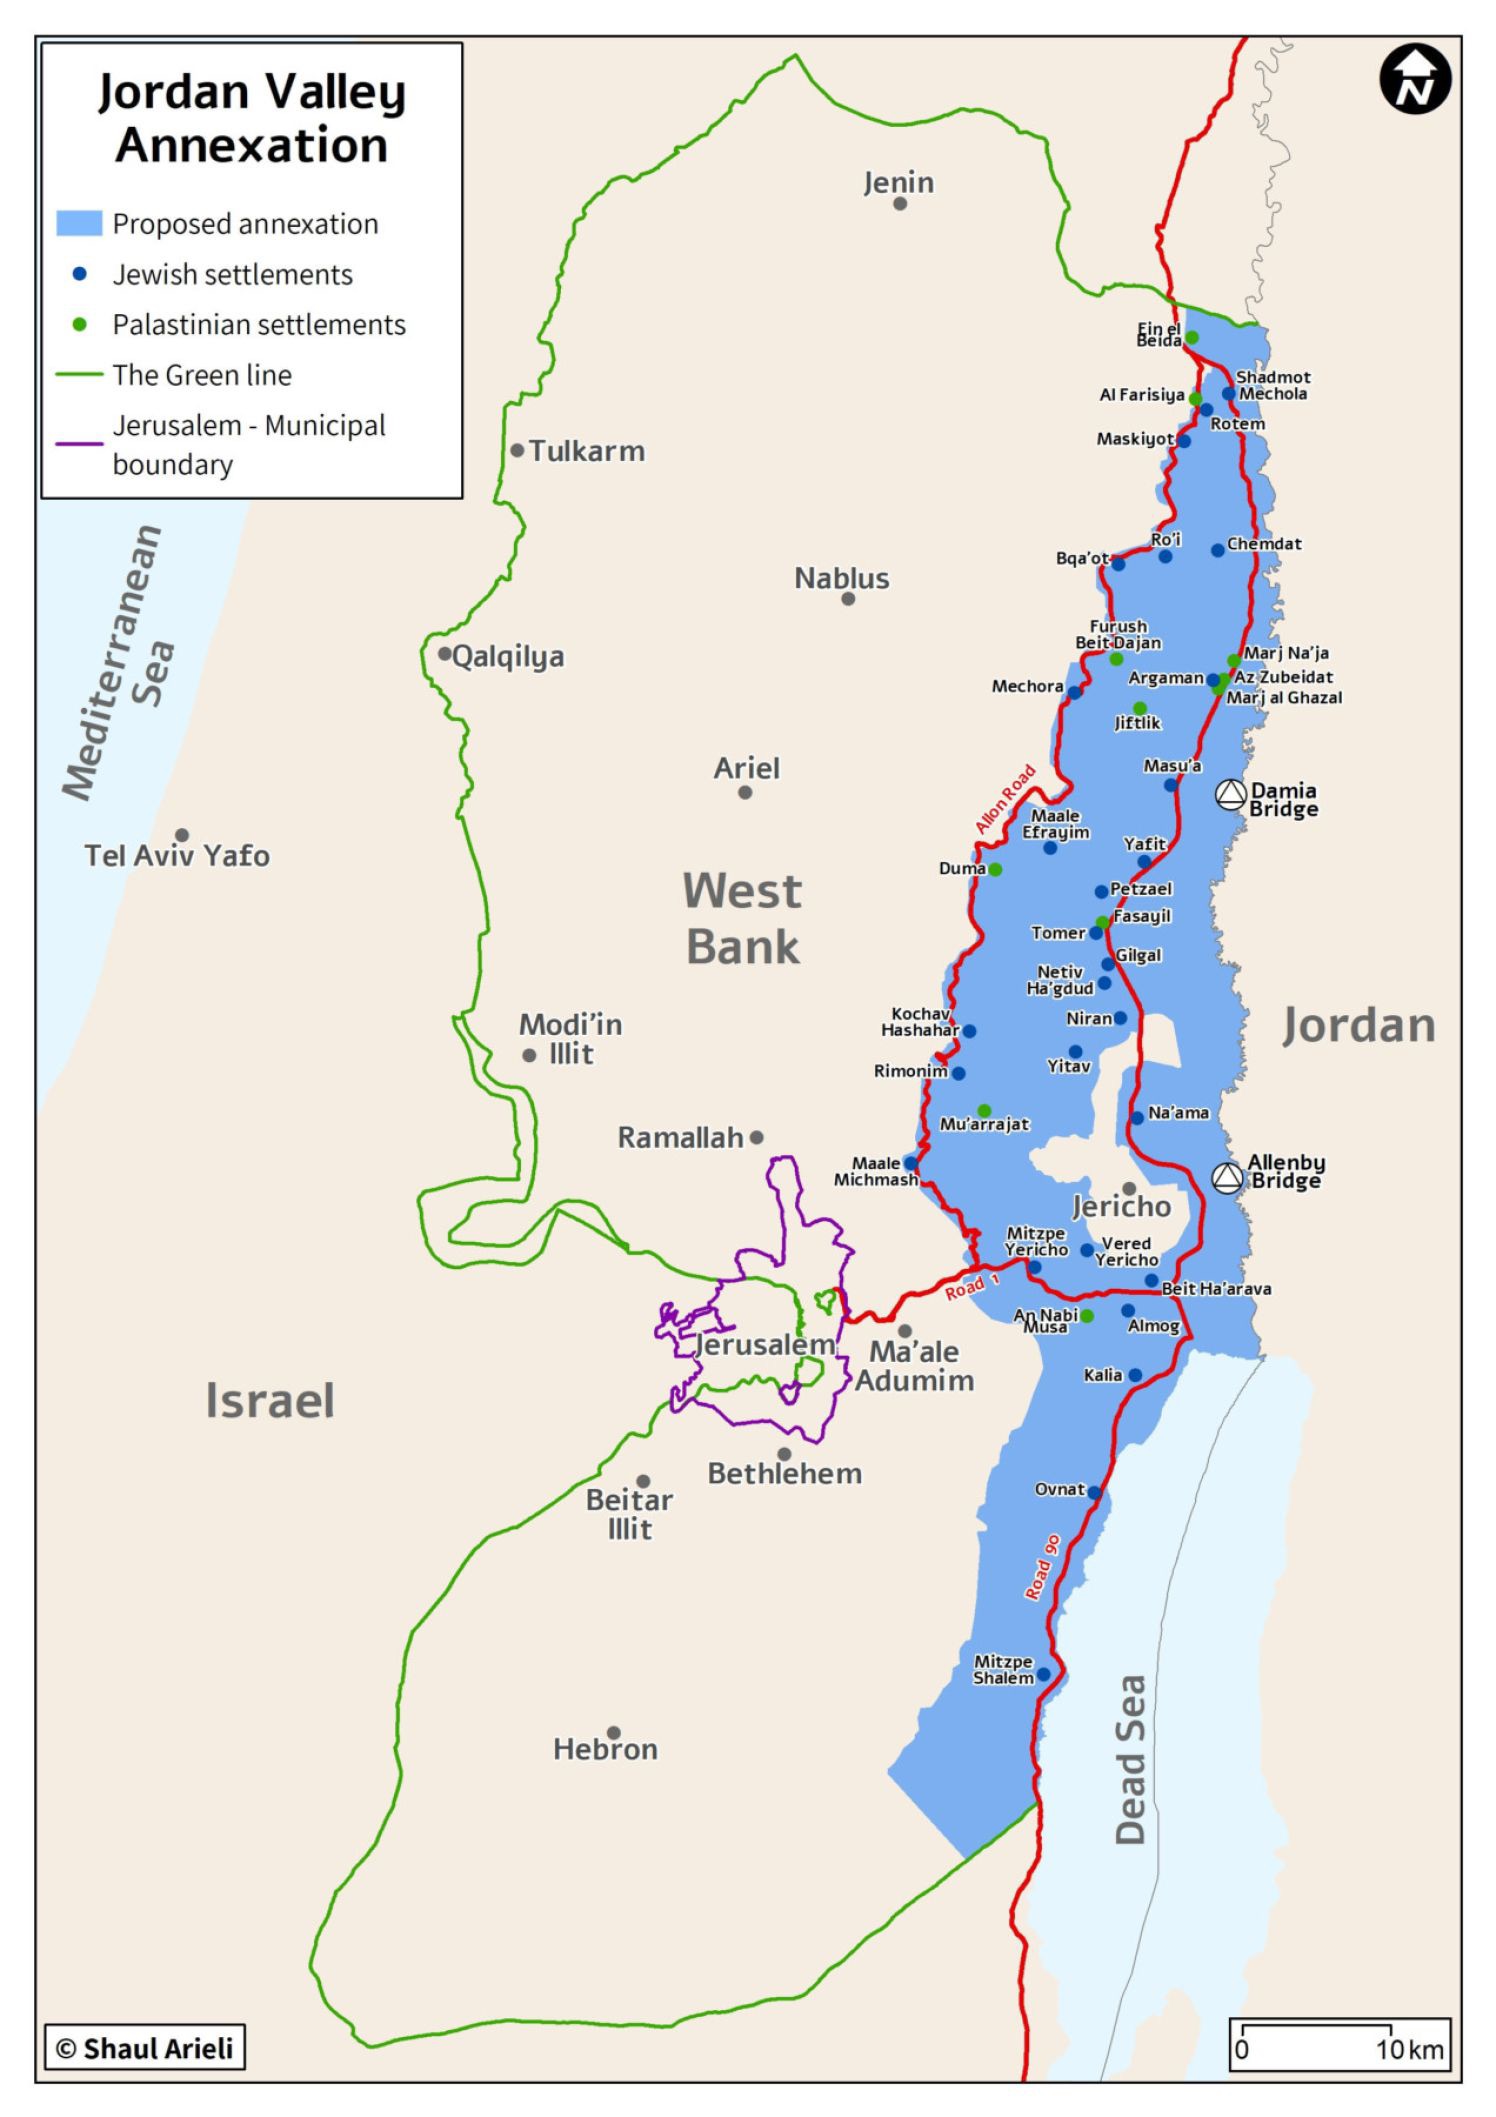 The Jordan “Annexation” Map